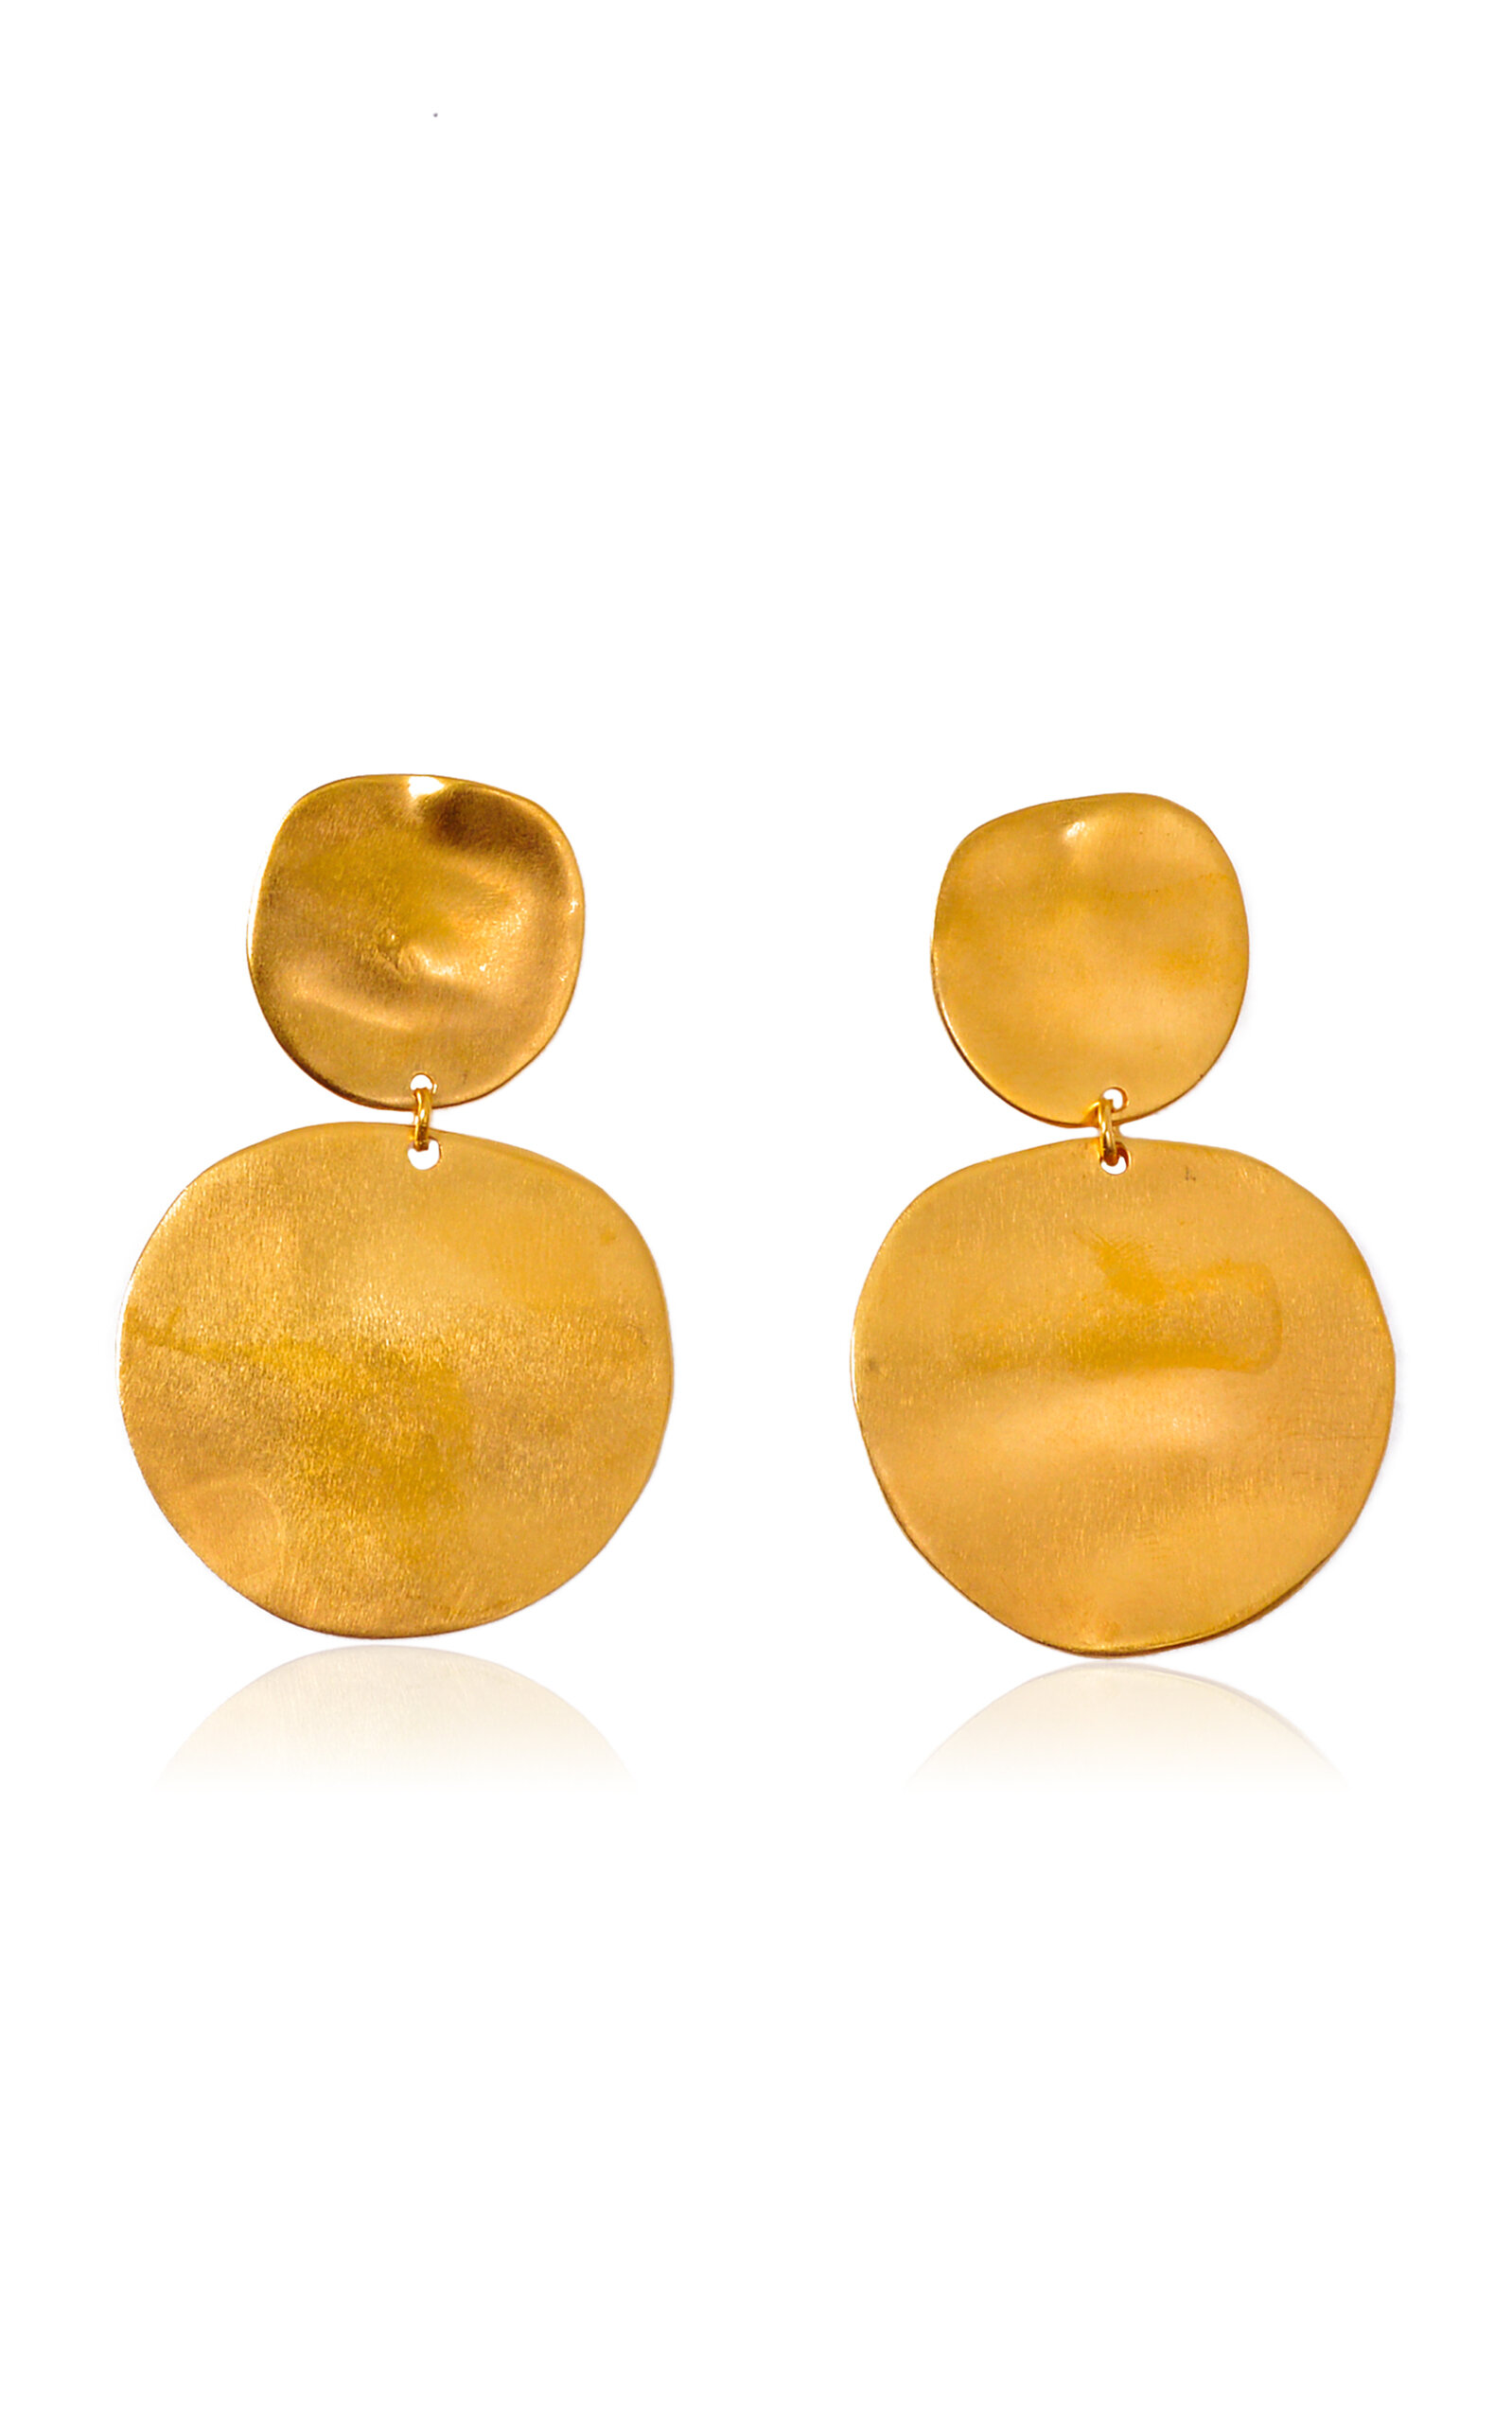 Cano Chimila 24k Gold-plated Earrings